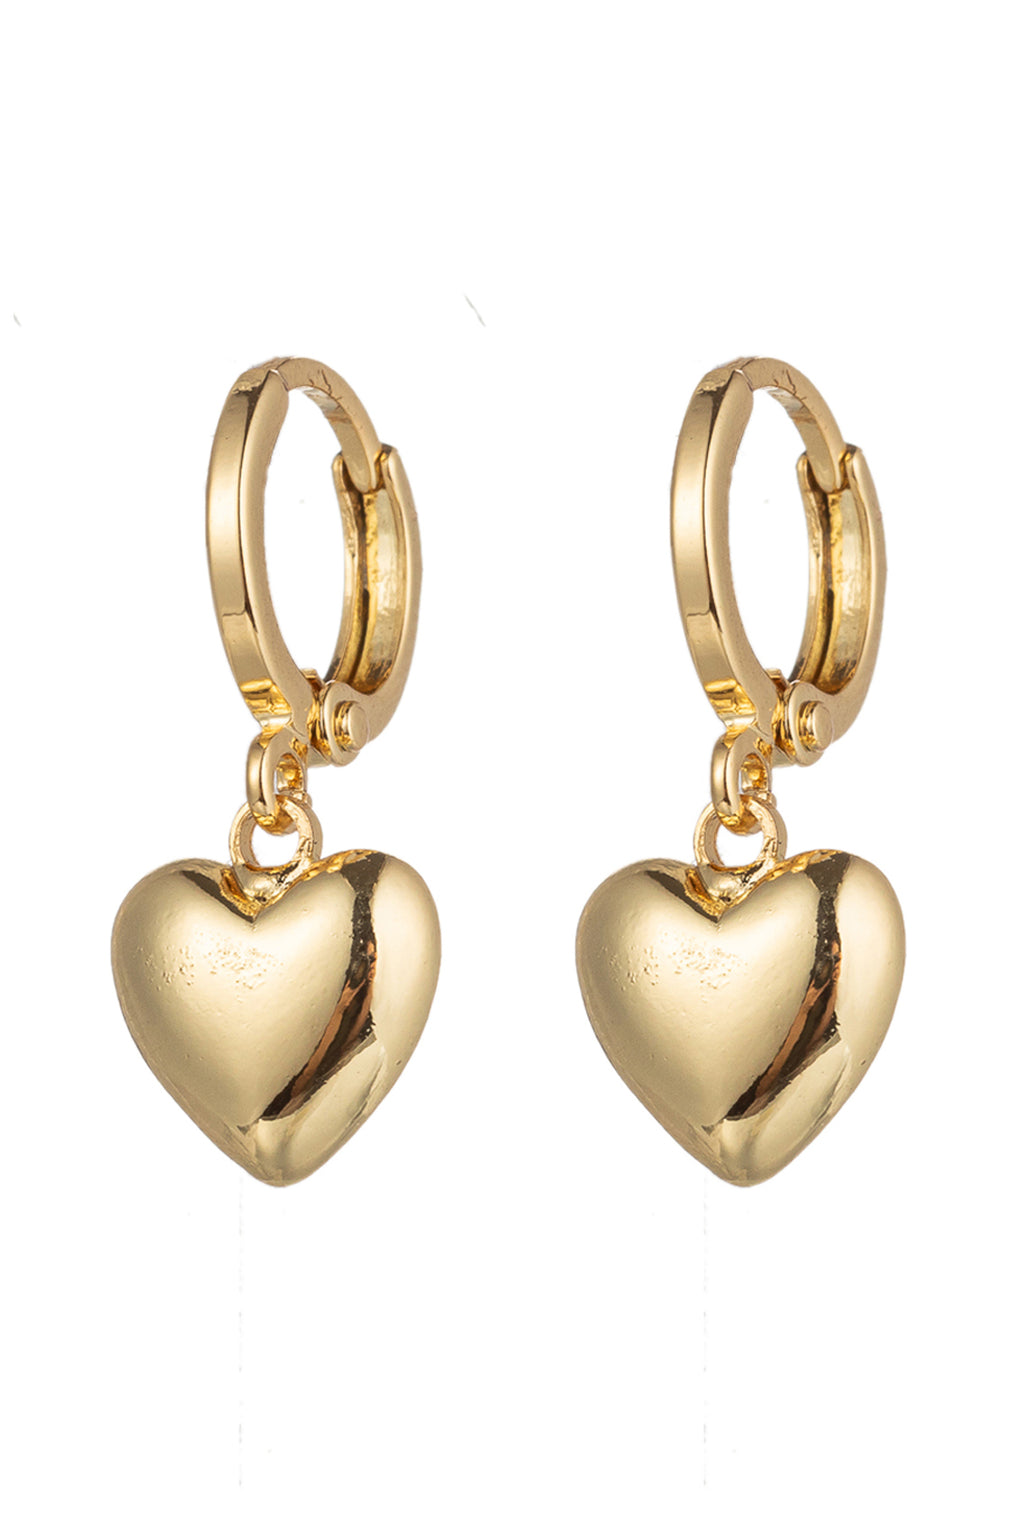 24k gold plated mini heart huggie earrings.